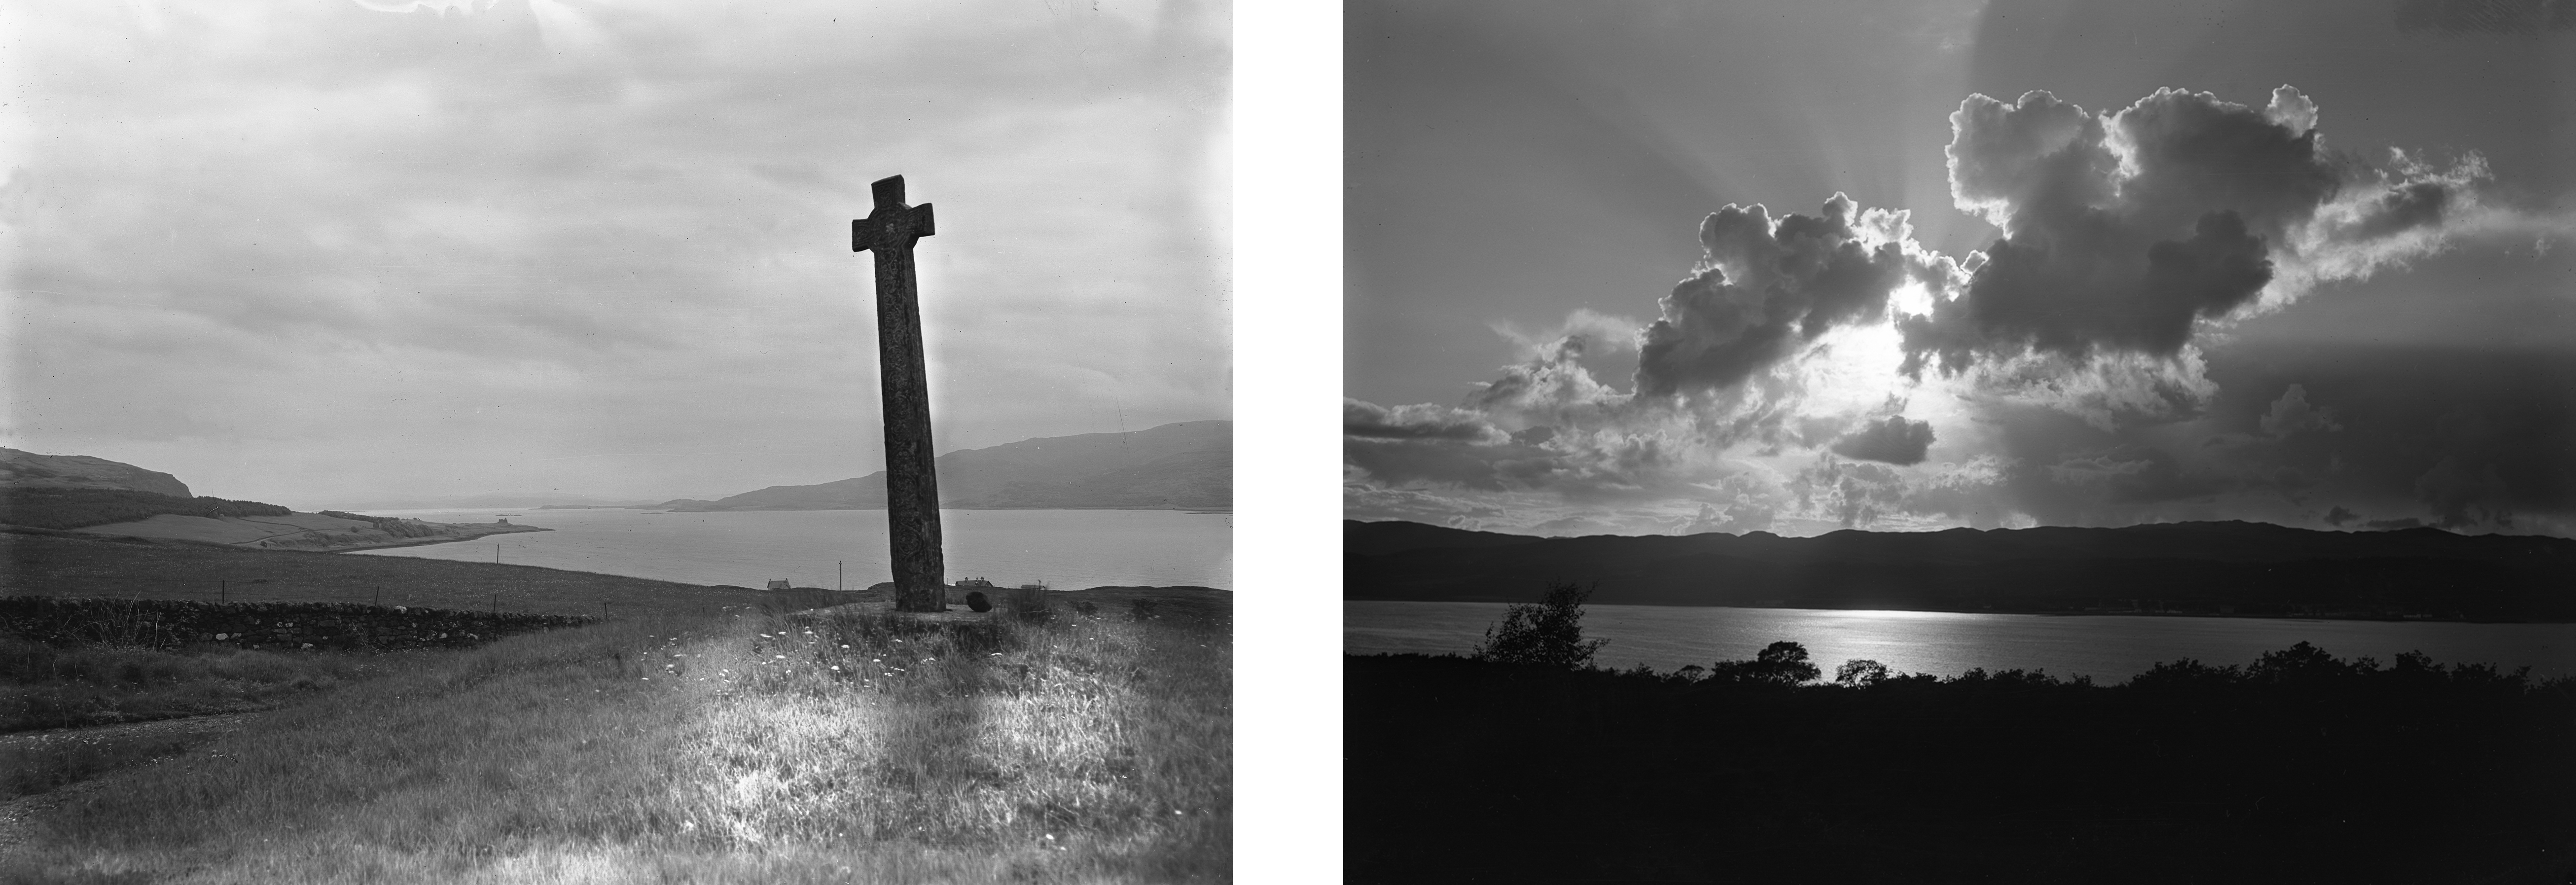 “Celtic cross, Fiunary, Morvern” by Robert Moyes Adam, 1919 (left, St Andrews RMA-H-750) and “Sunset over hills, Inveraray” by Robert Moyes Adam, 1915 (right, St Andrews RMA-H-469)